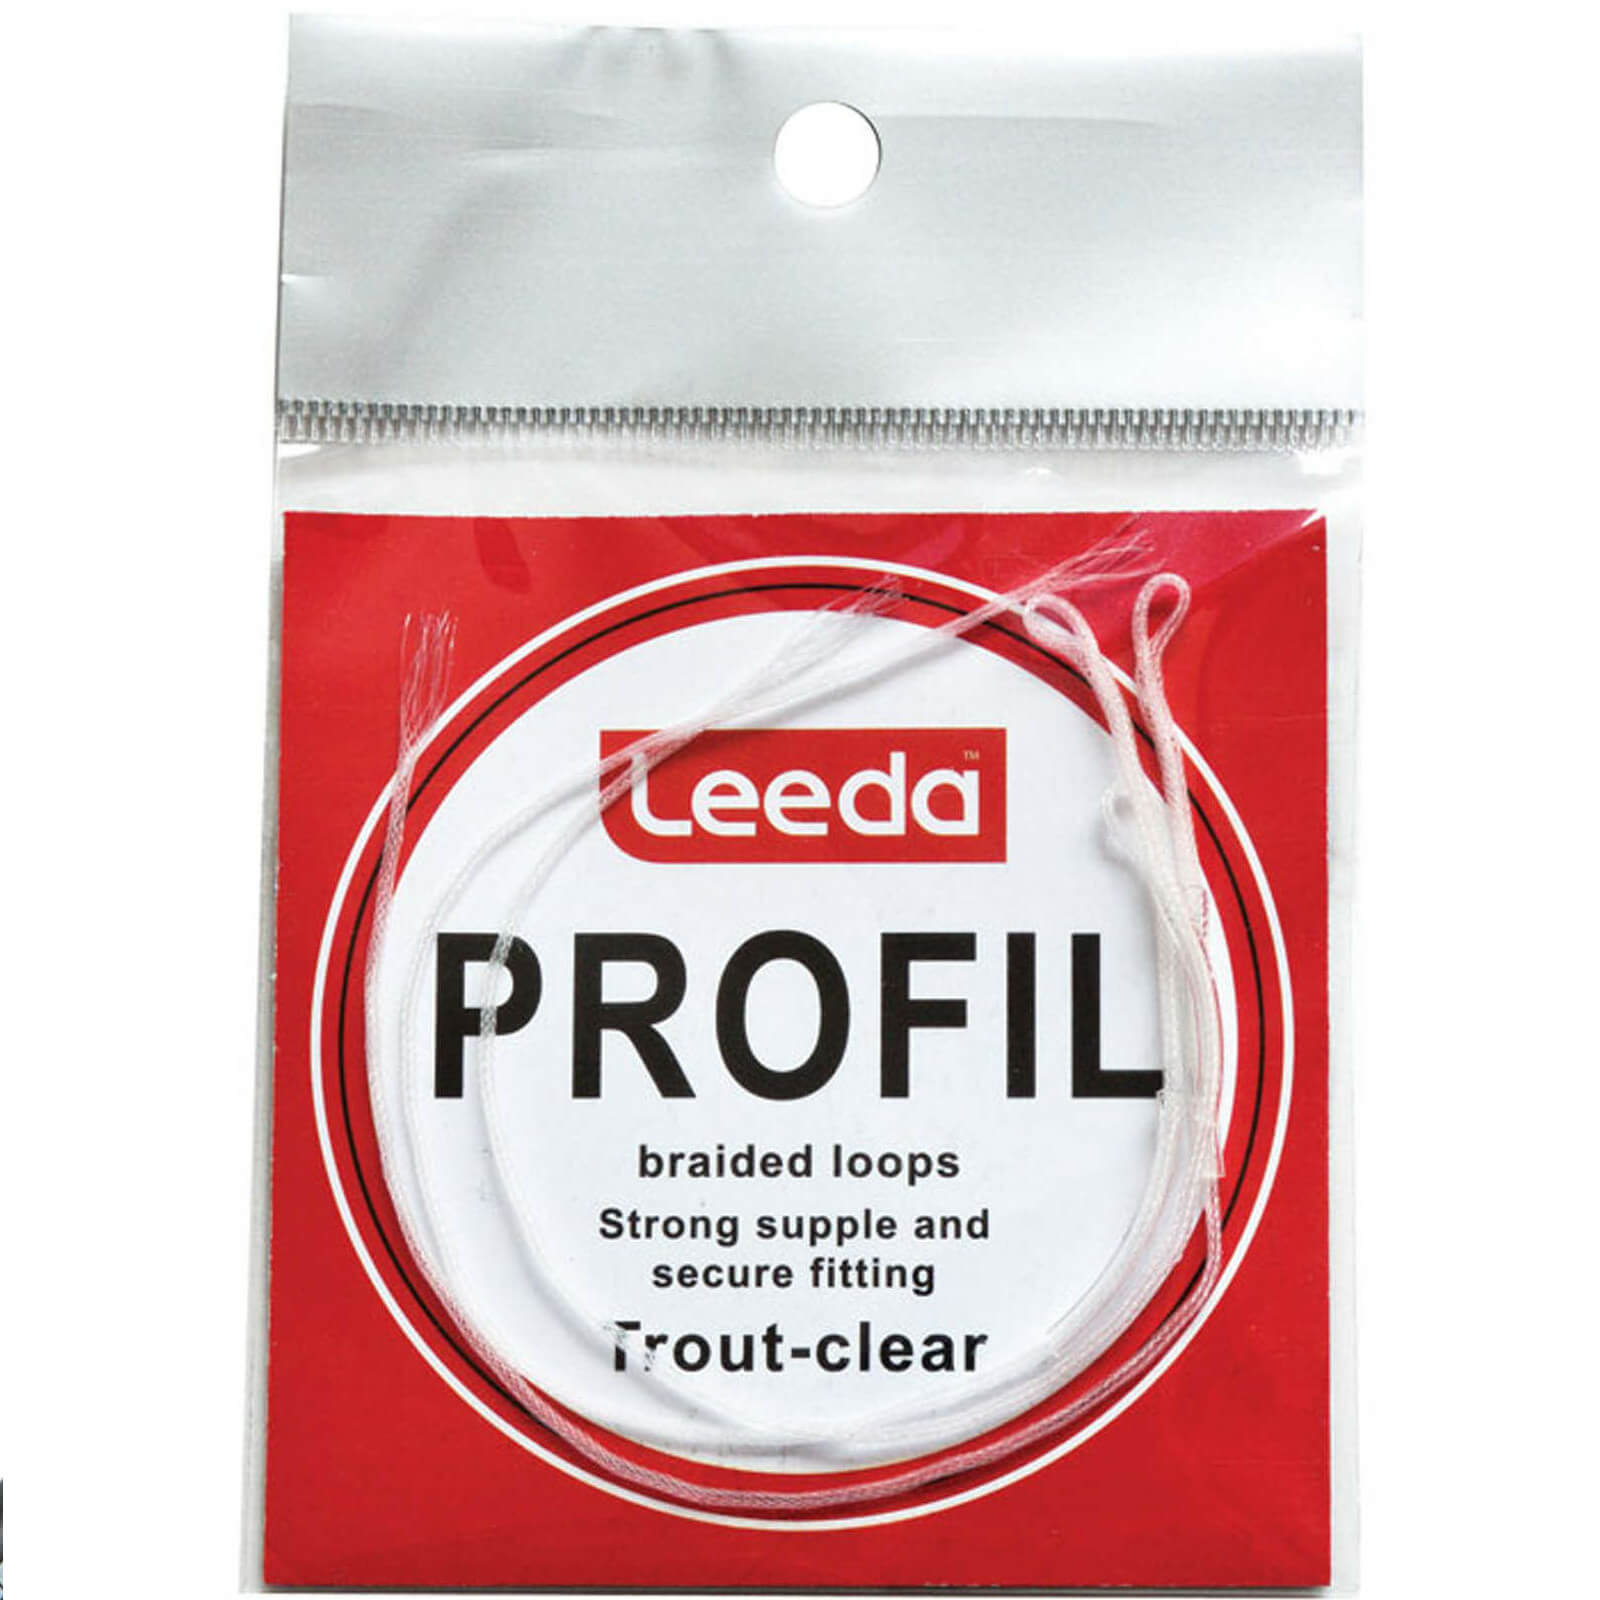 Leeda Profil Briaded Loops Trout Clear 3 Pack Fishing Profil